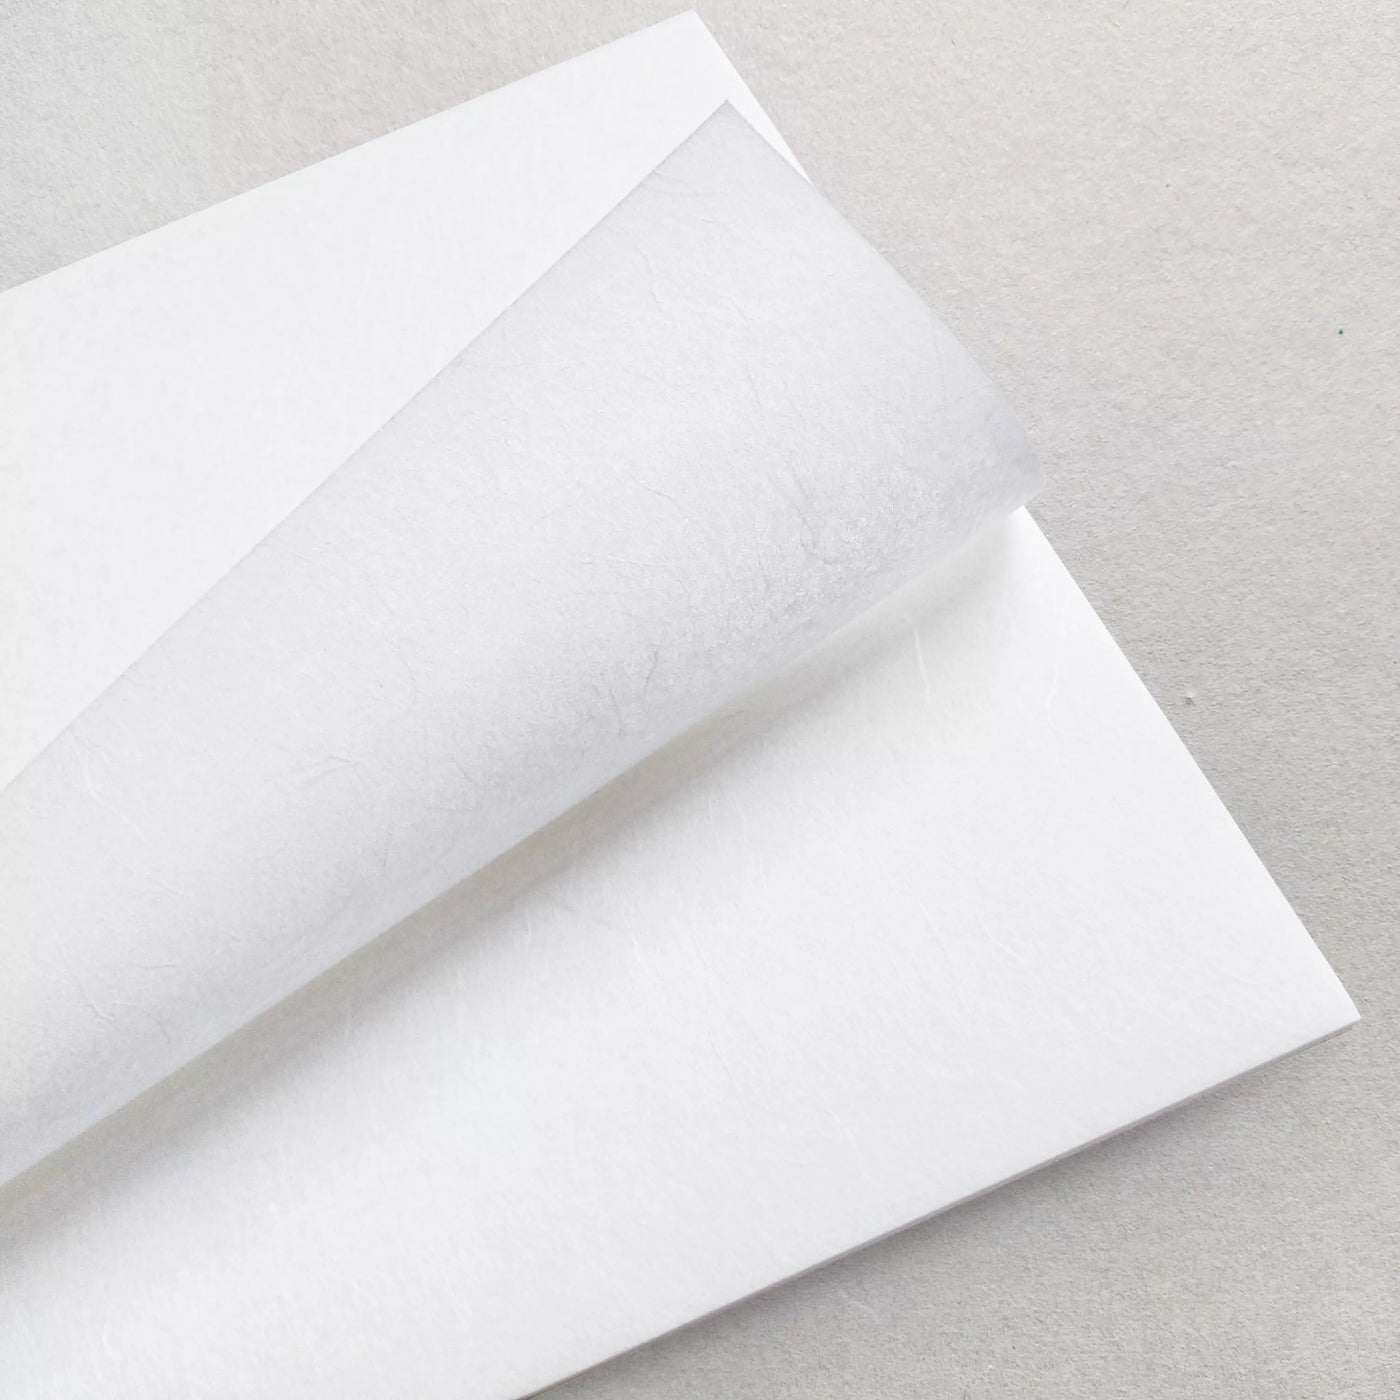 KZ Studio - Decoupage Unryu Kozo Washi Paper 40 Sheets Premium Mulberry Rice Paper Tissue Napkins for Printmaking and Decoupage